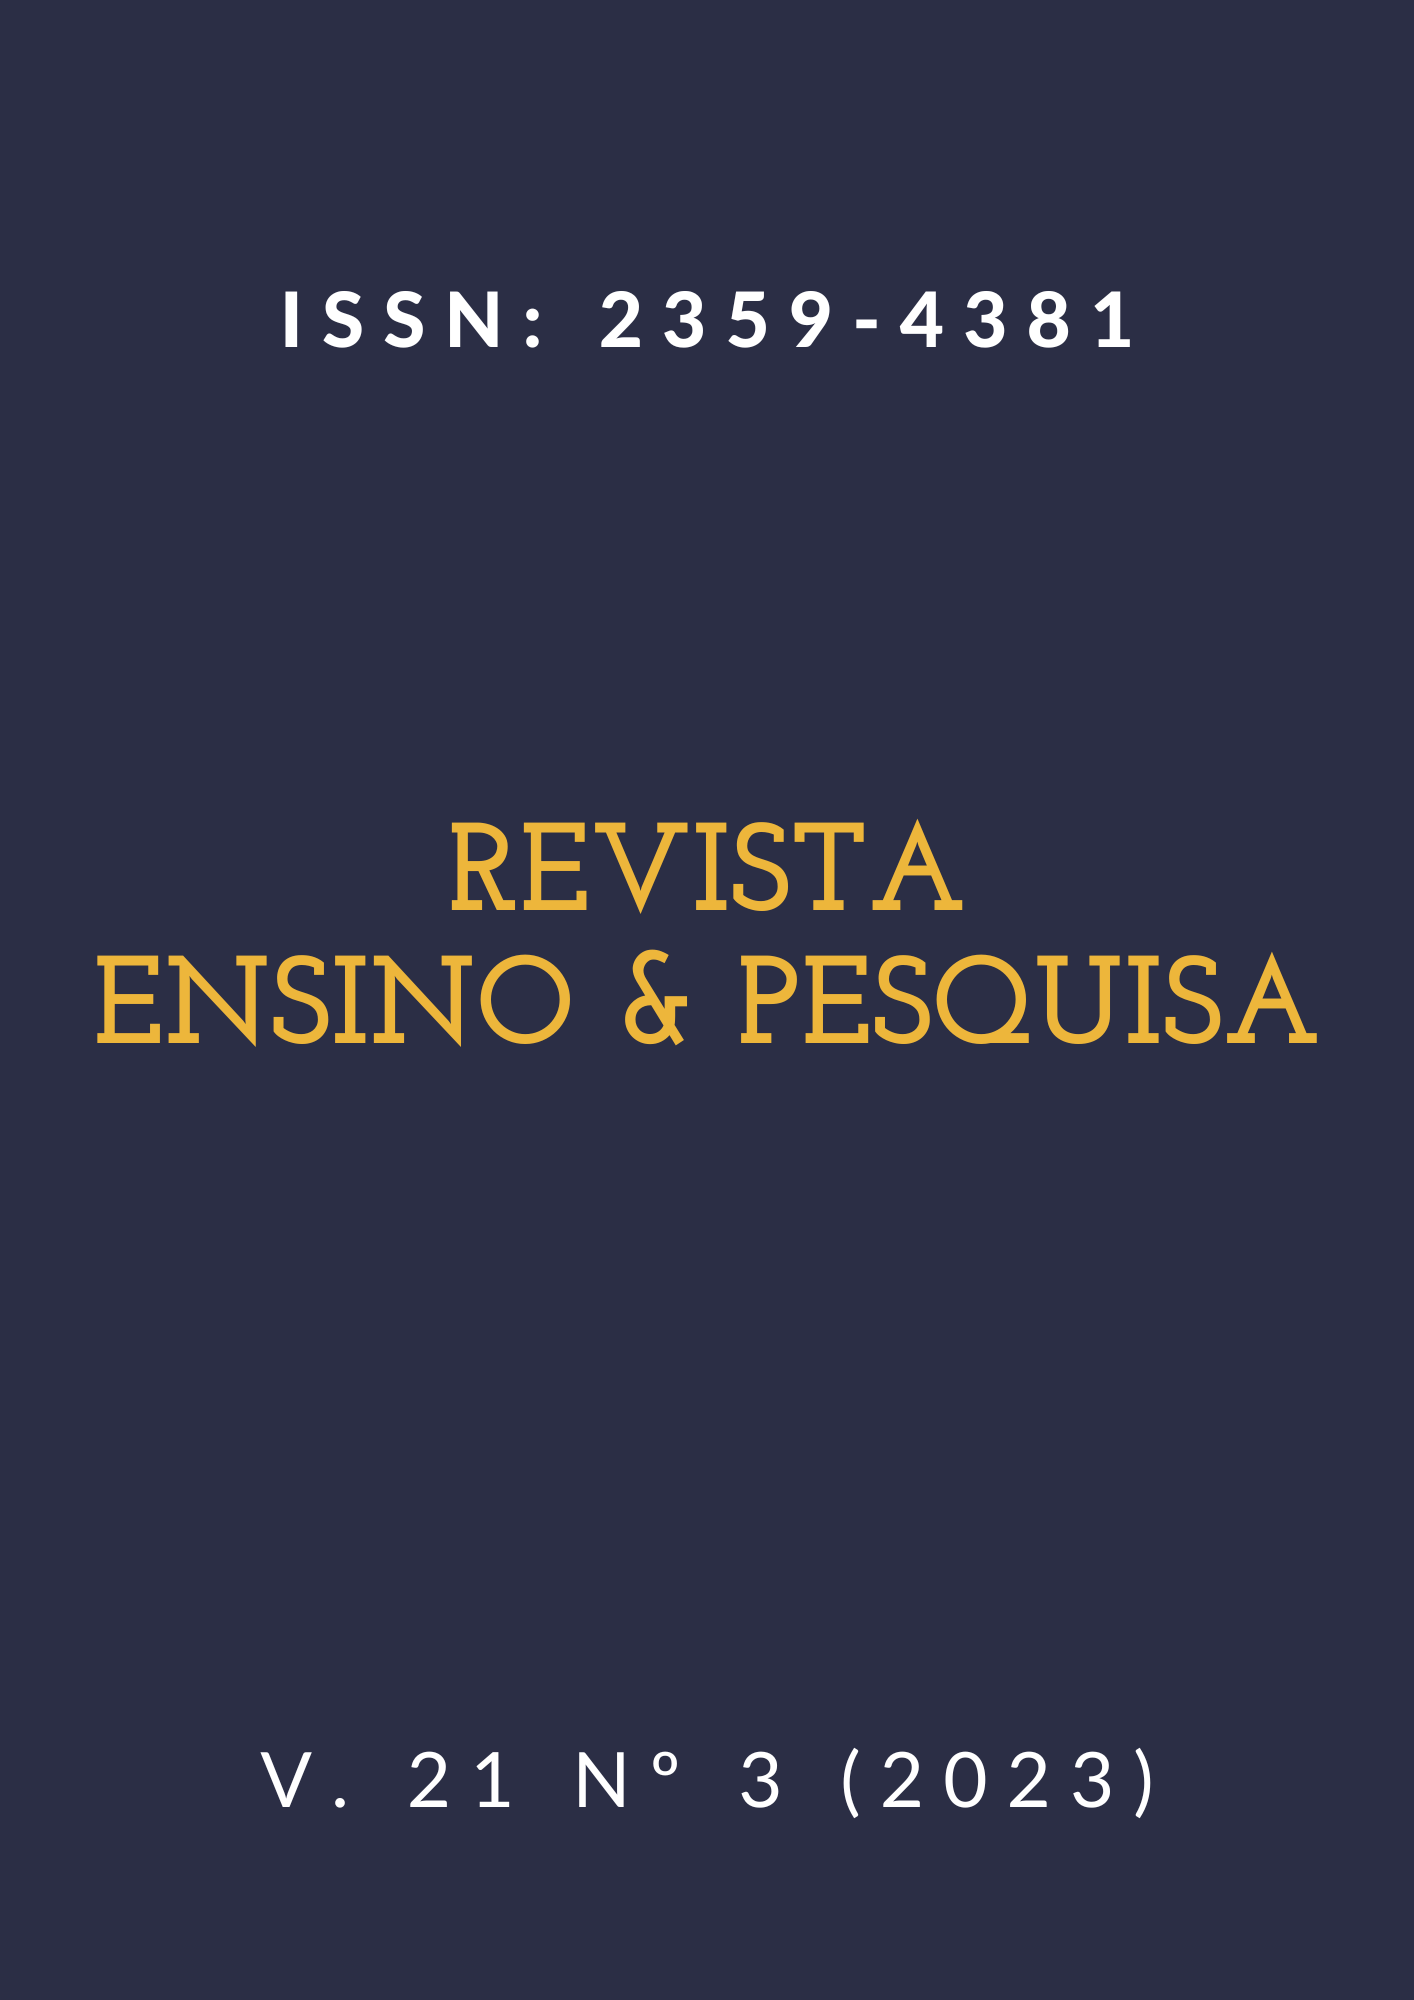 					Visualizar v. 21 n. 3 (2023): Ensino & Pesquisa
				